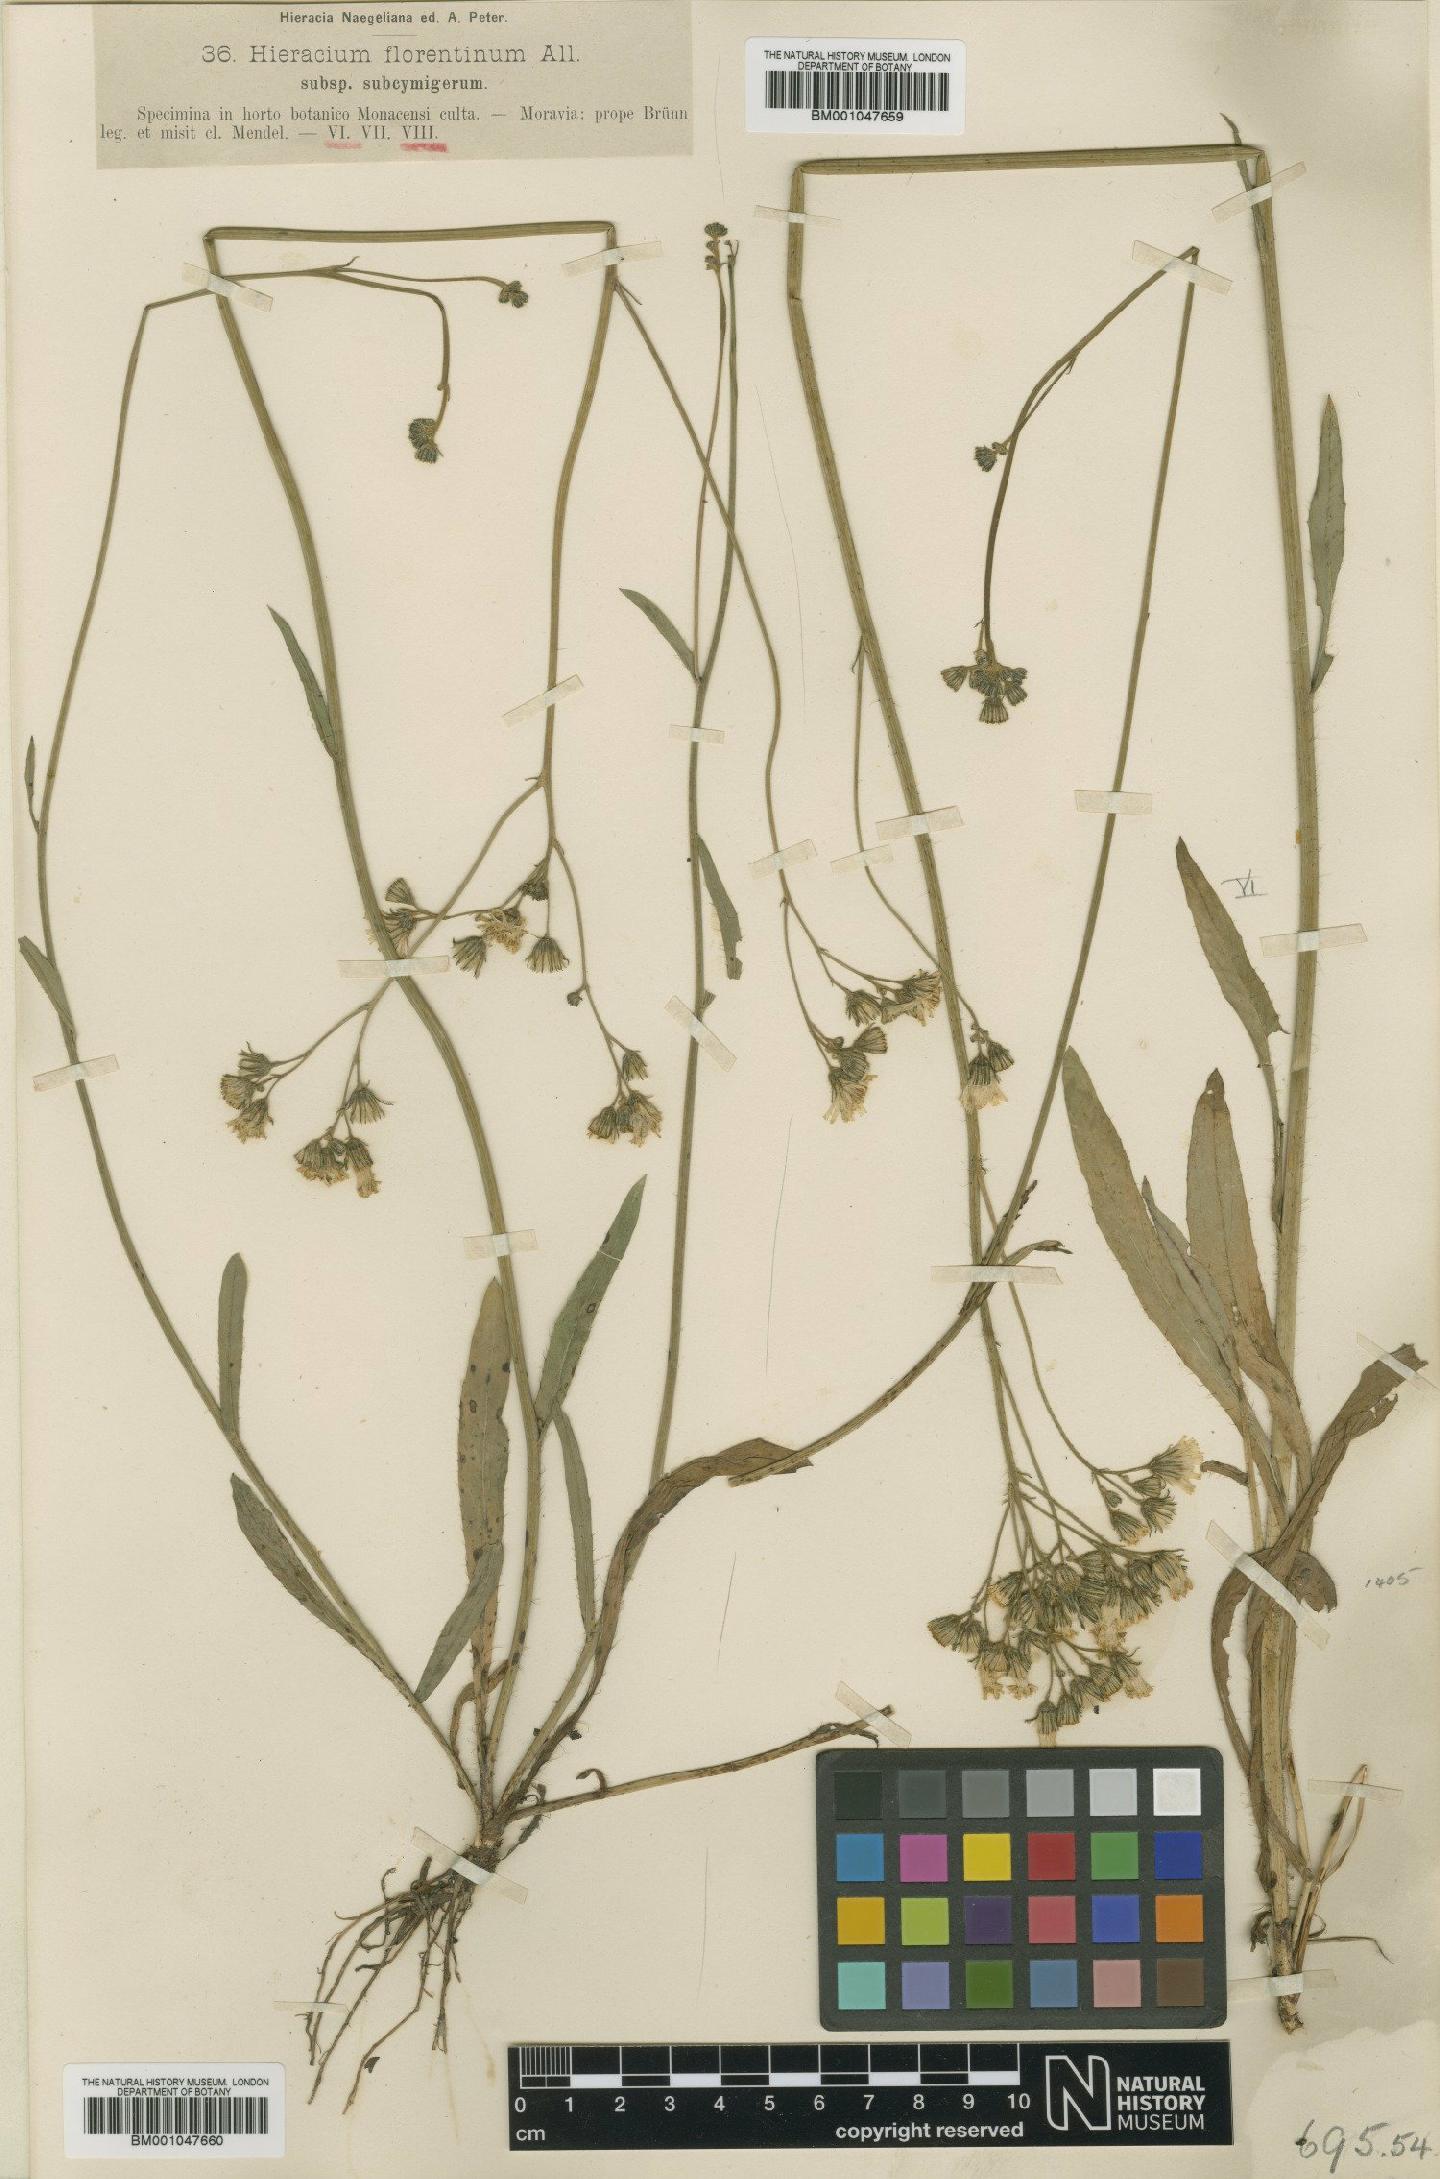 To NHMUK collection (Hieracium florentinum subsp. subcymigerum Nägeli & Peter; Type; NHMUK:ecatalogue:2804176)